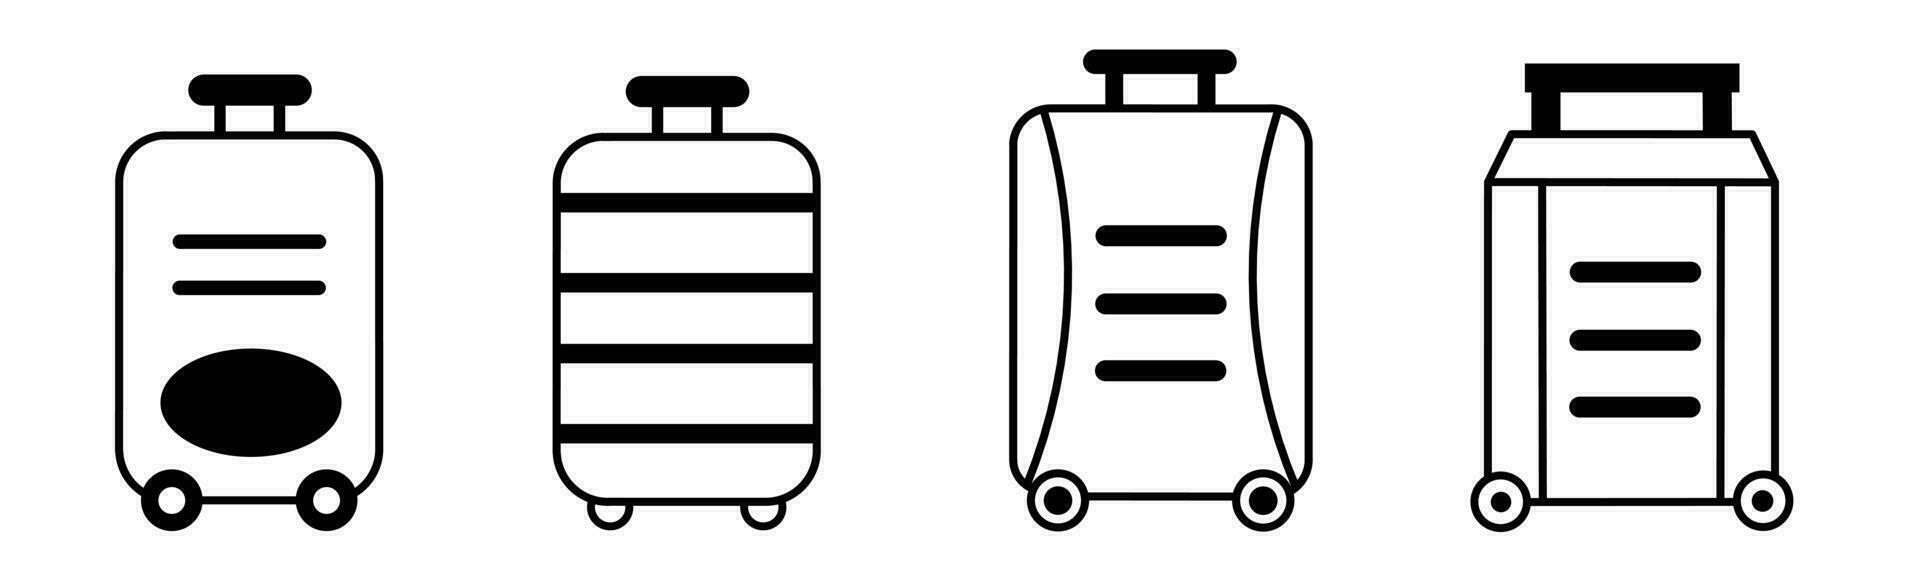 maleta ilustración. maleta conjunto para negocio. valores vector. vector